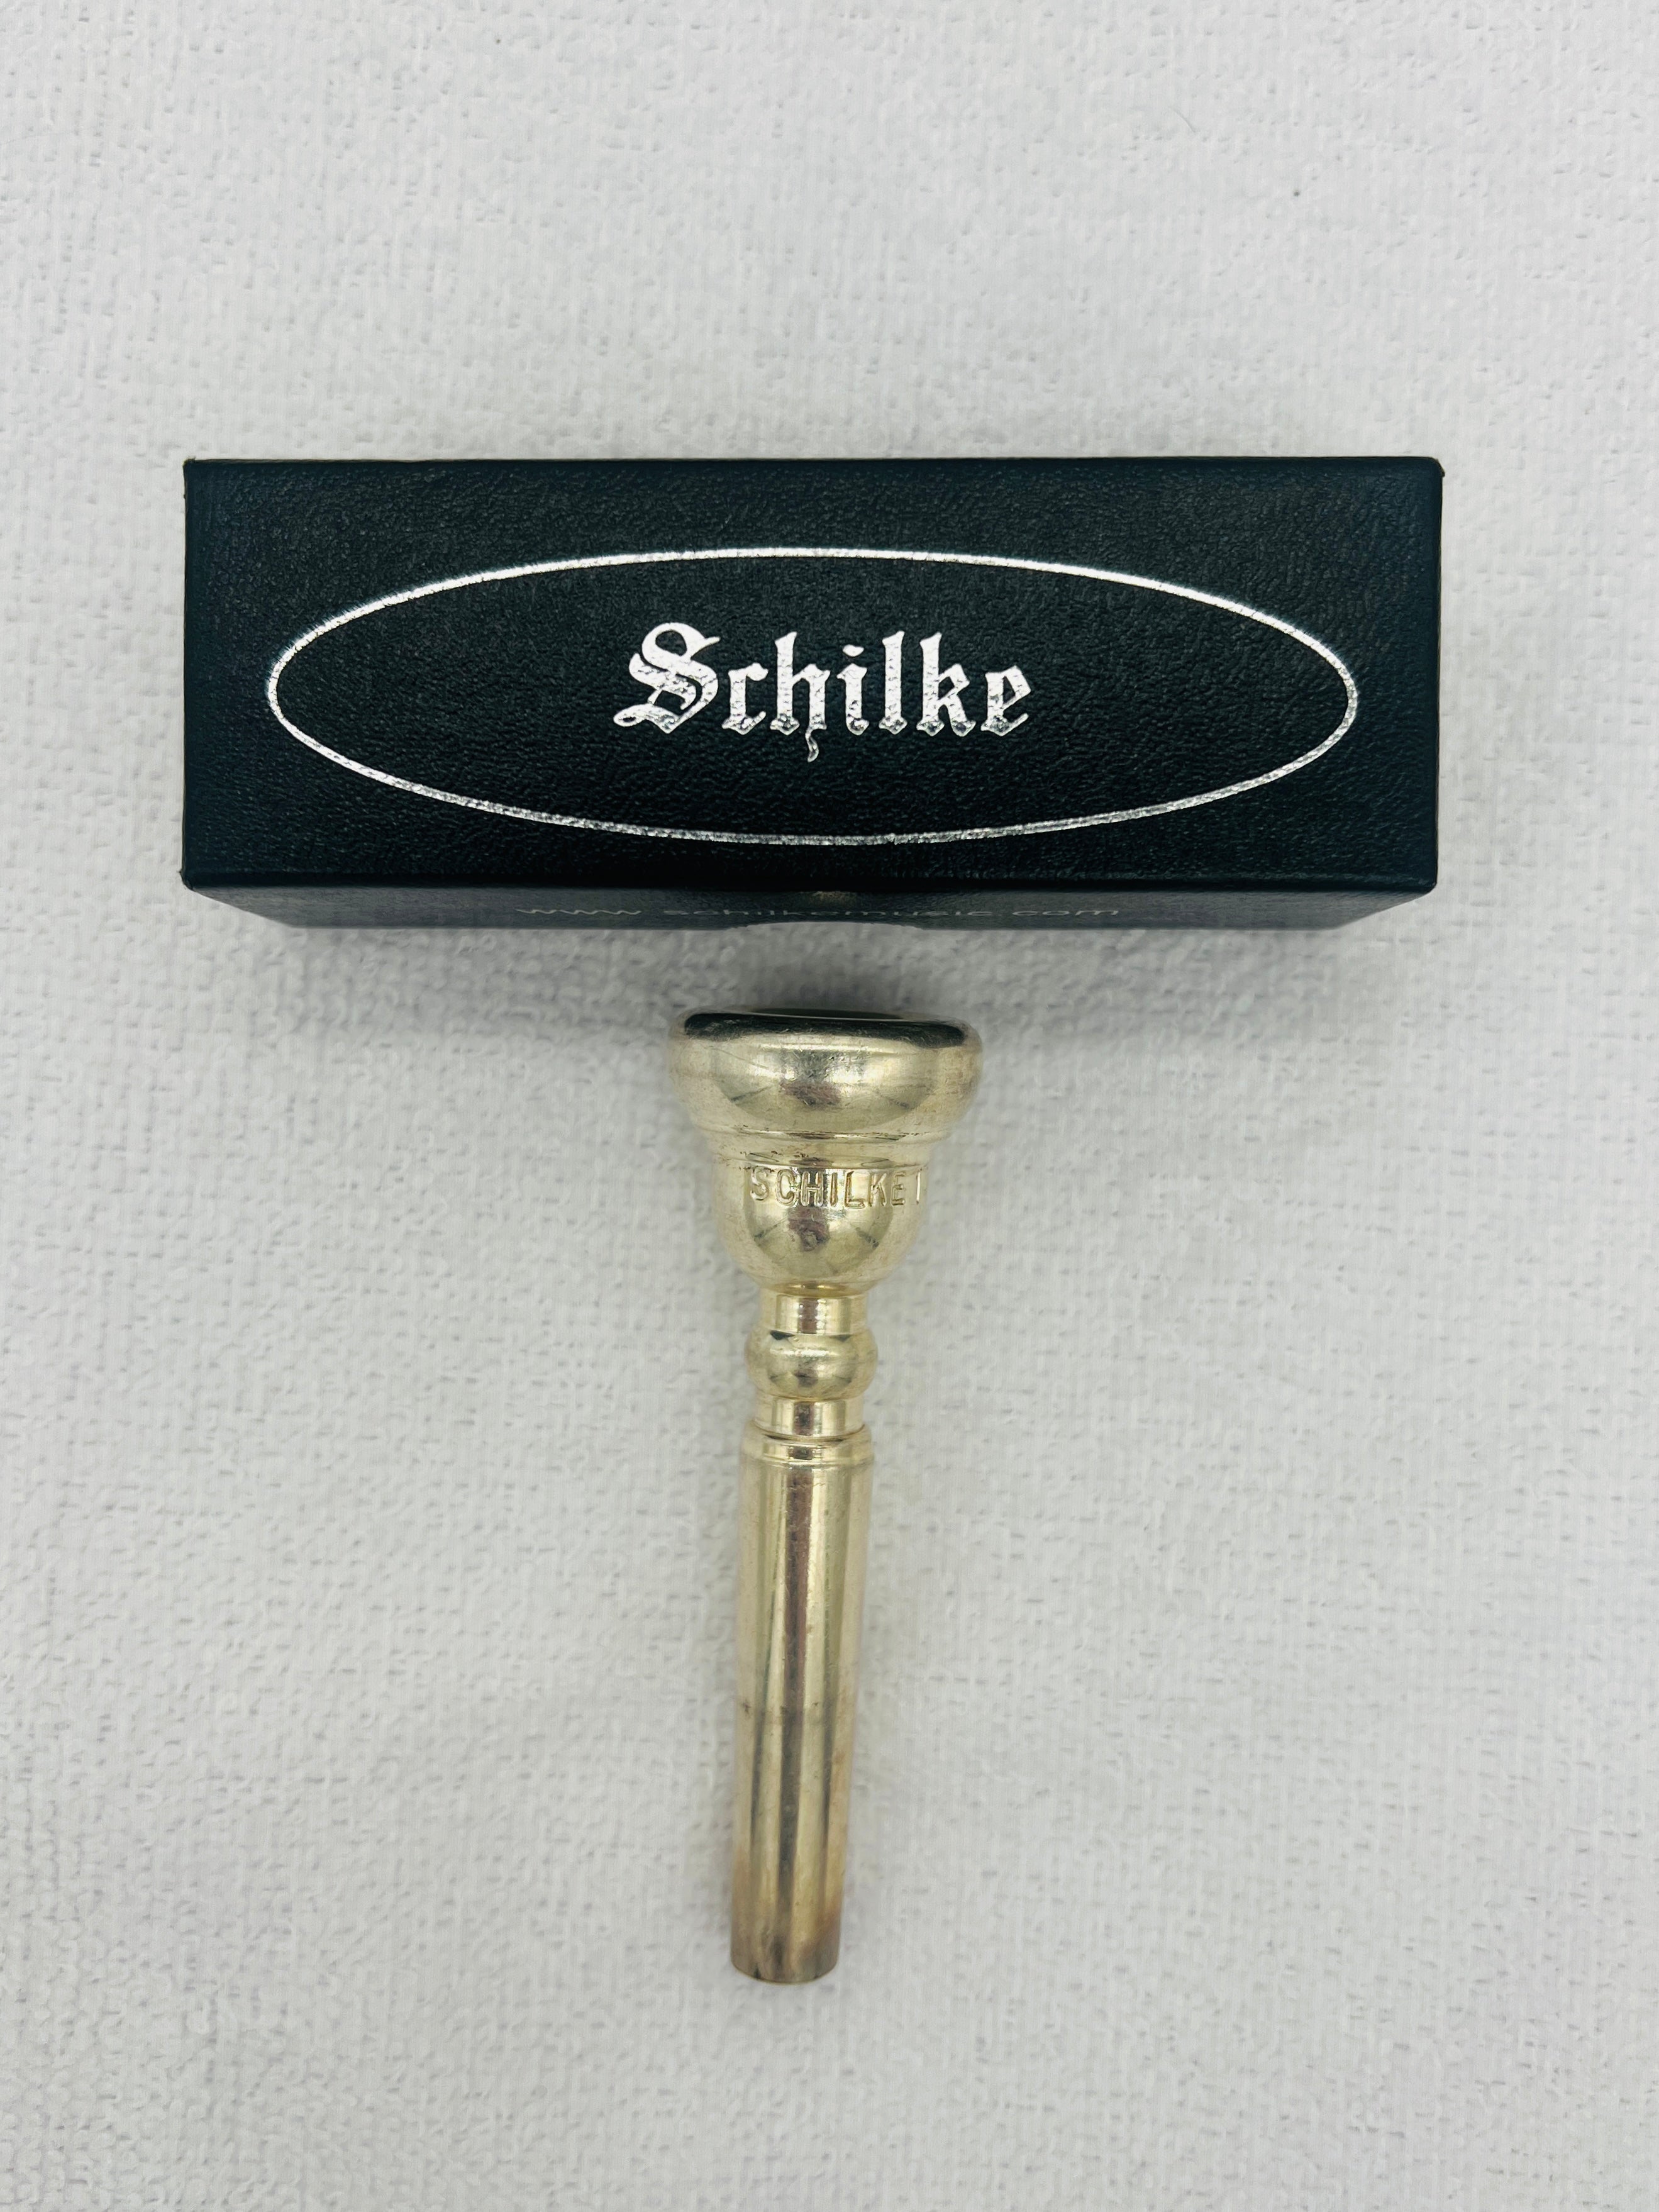 Schilke 14A4 Trumpet Mouthpiece Chicago, Illinois USA NEW Old Stock